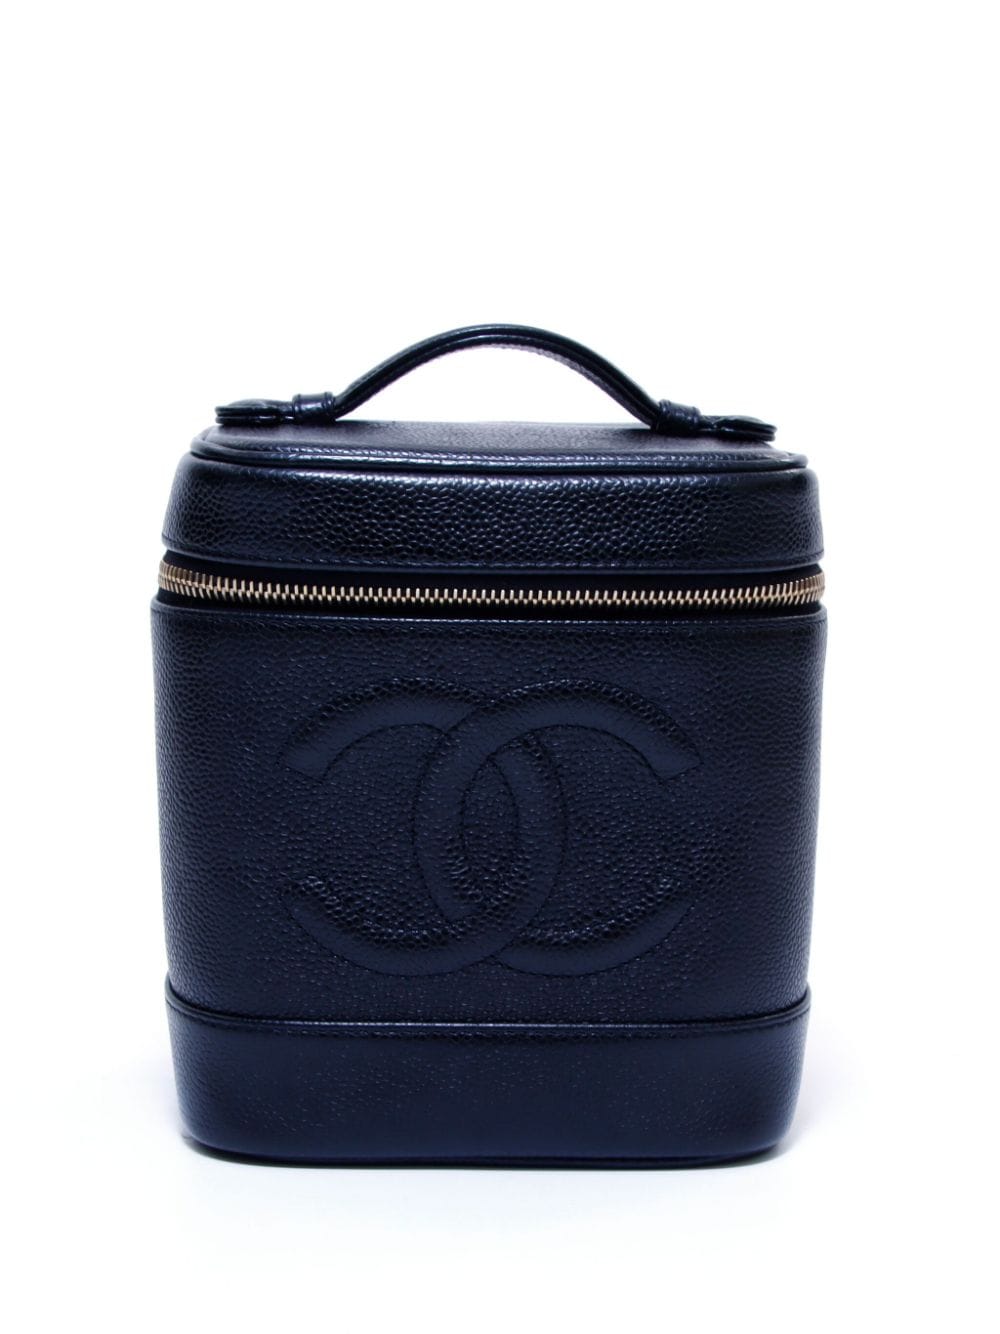 Pre-owned Chanel 2001/2002 Cc Stitch Vanity Handbag In Black